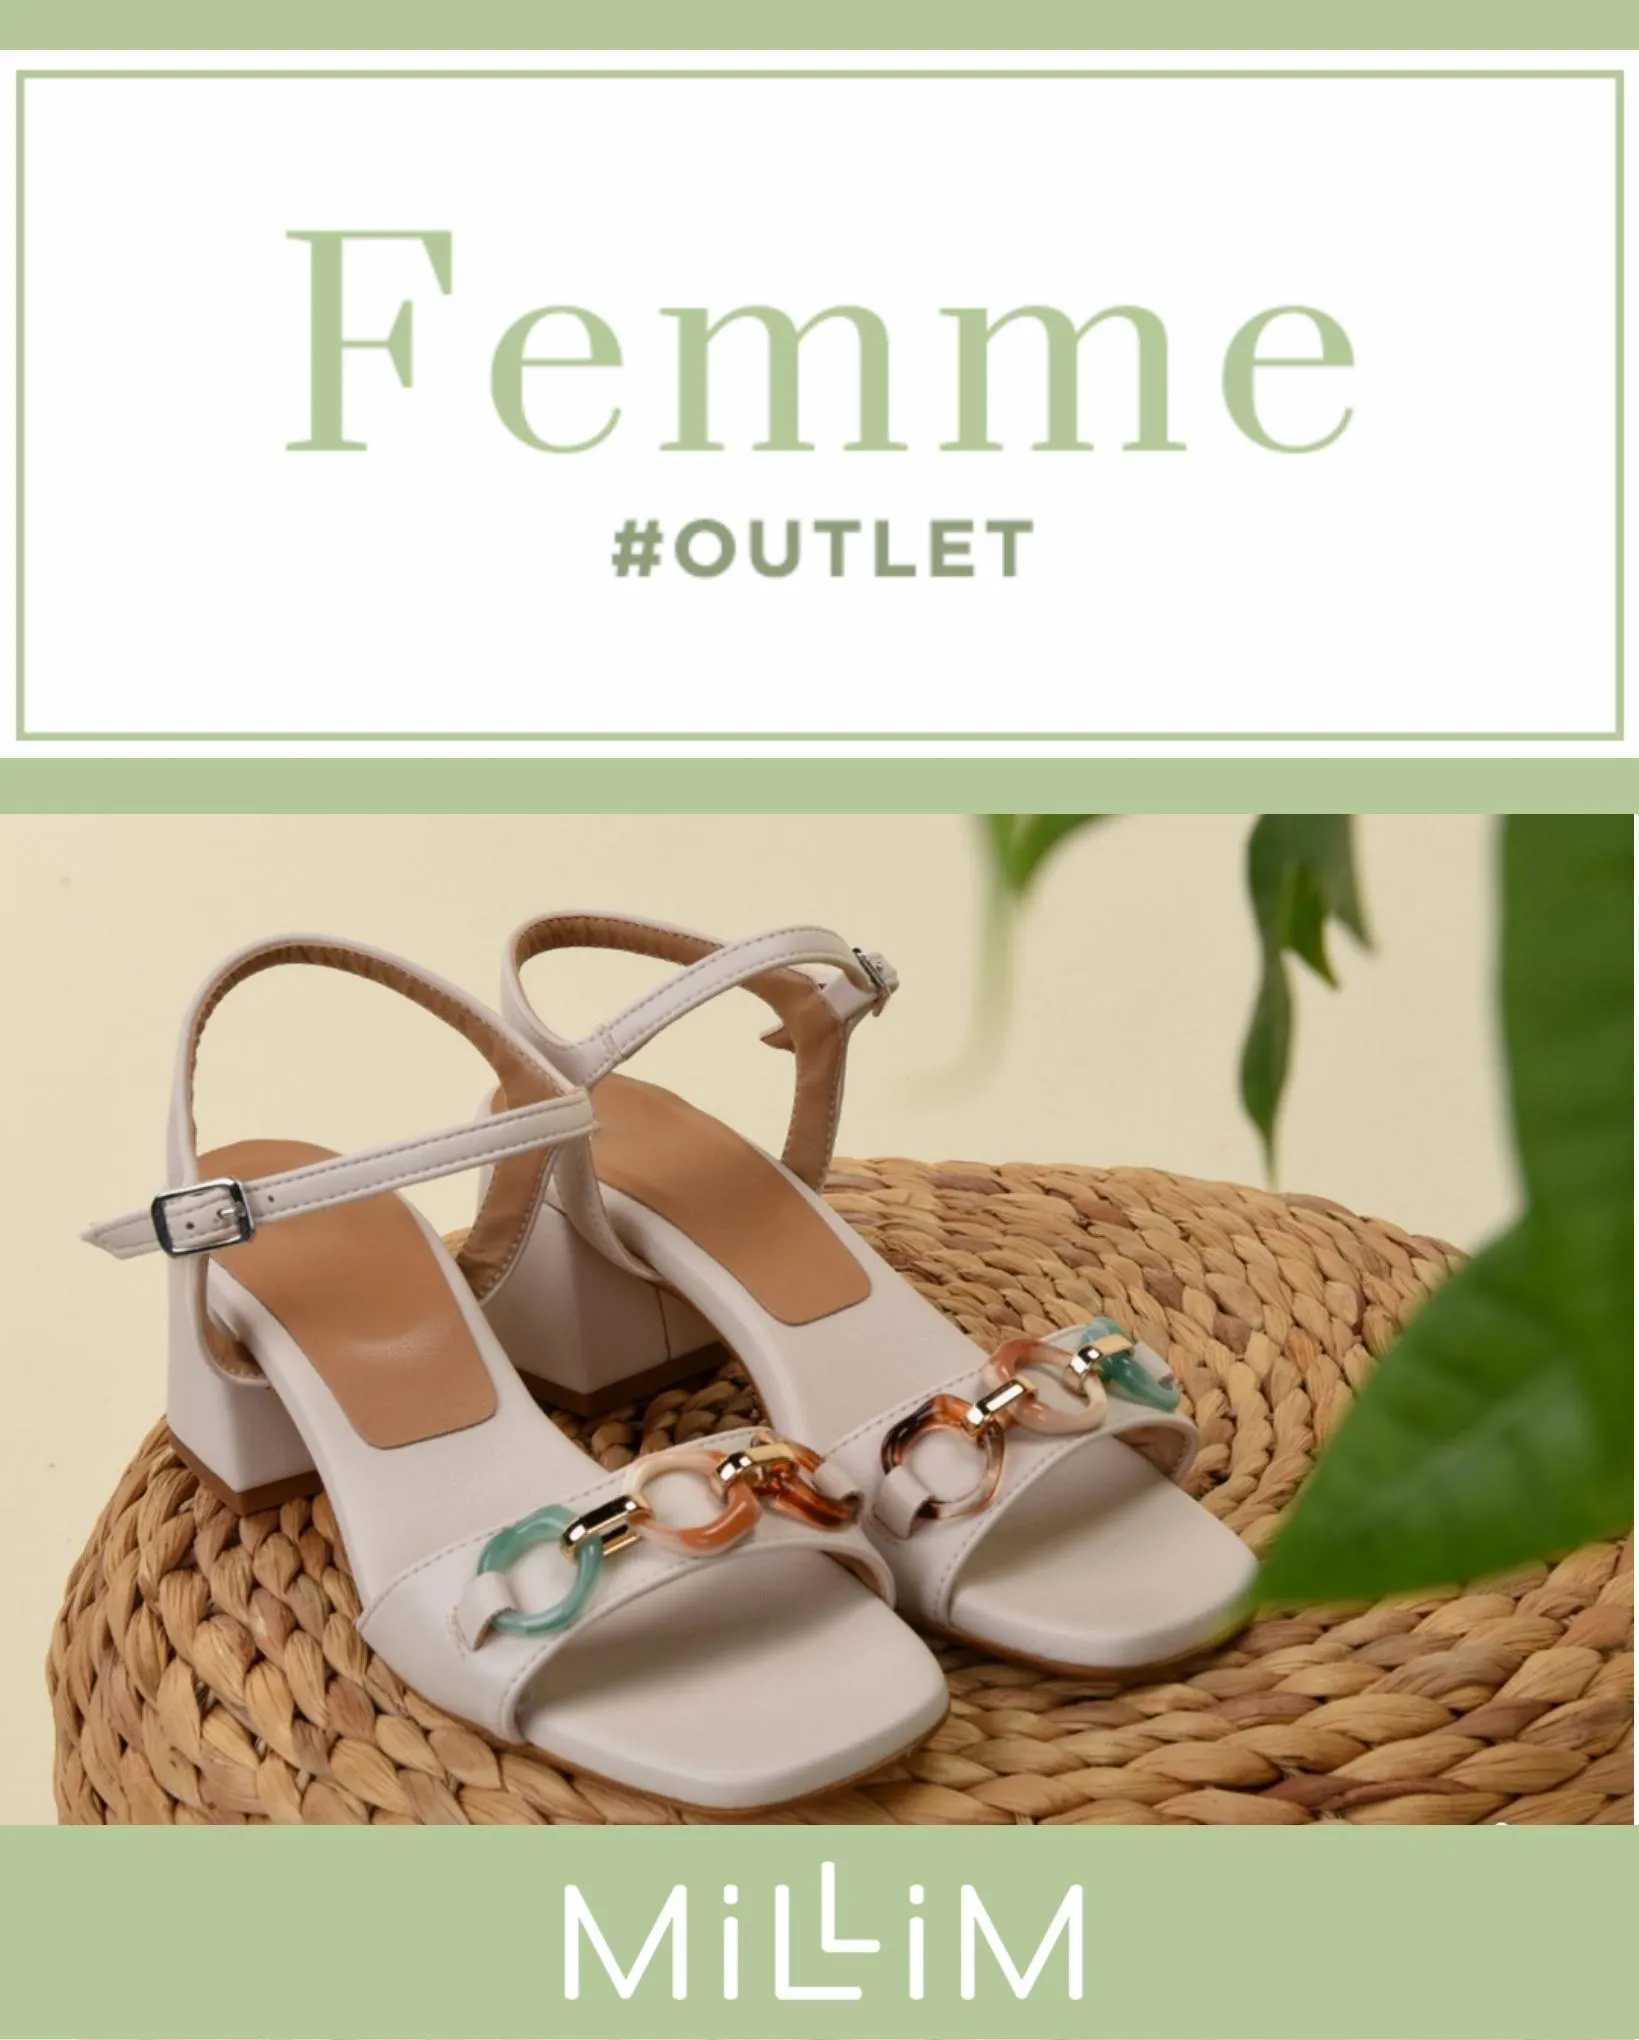 Catalogue Femme #Outlet, page 00001